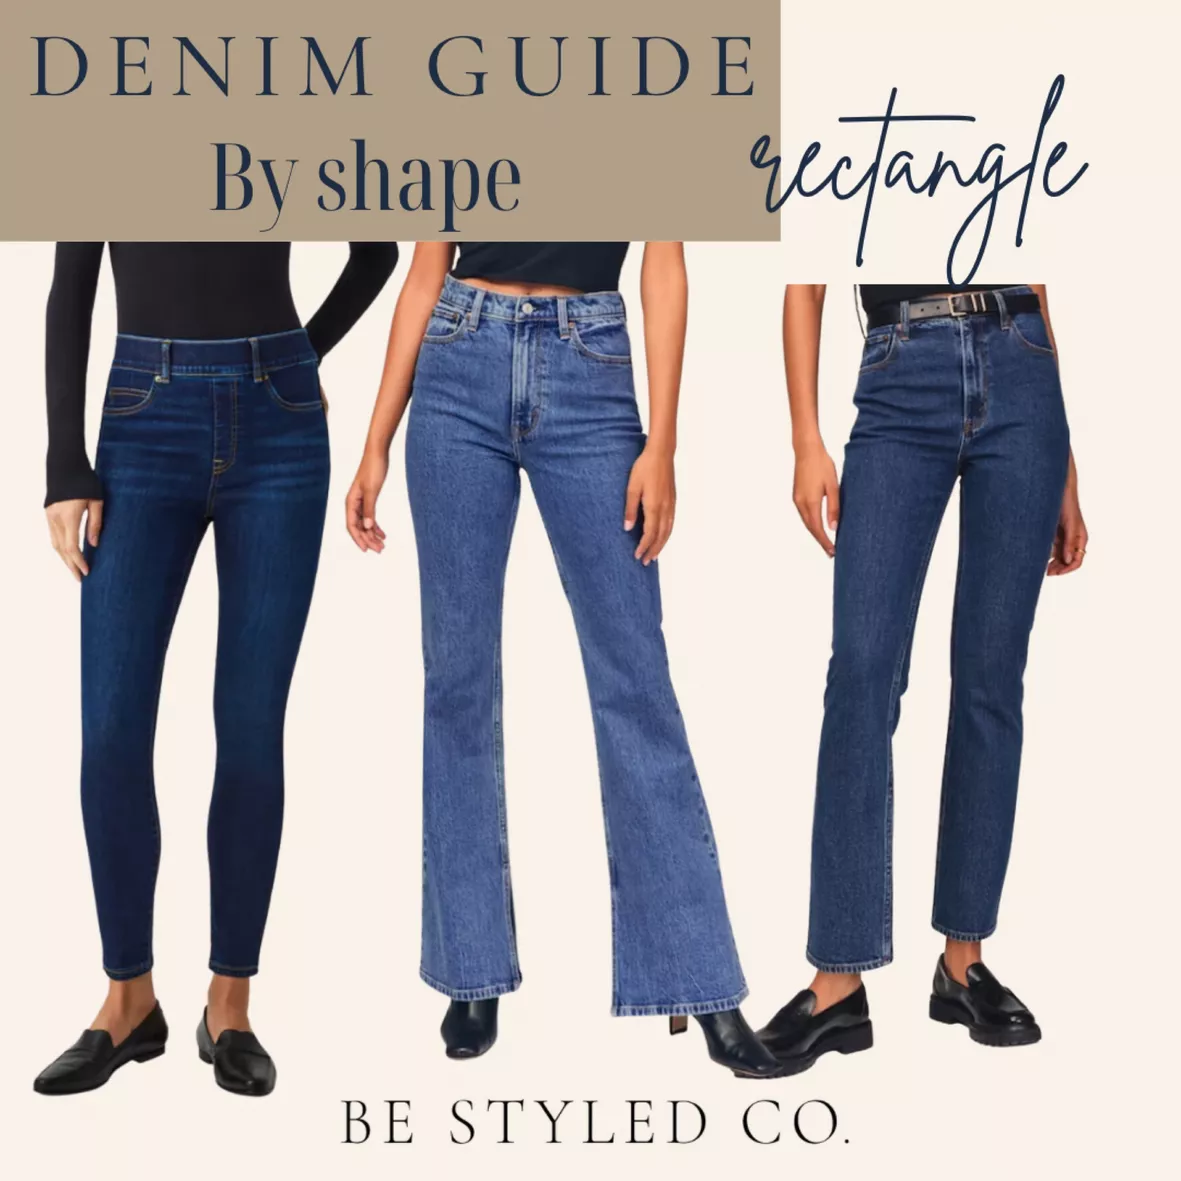 Women jeans for rectangle body shape